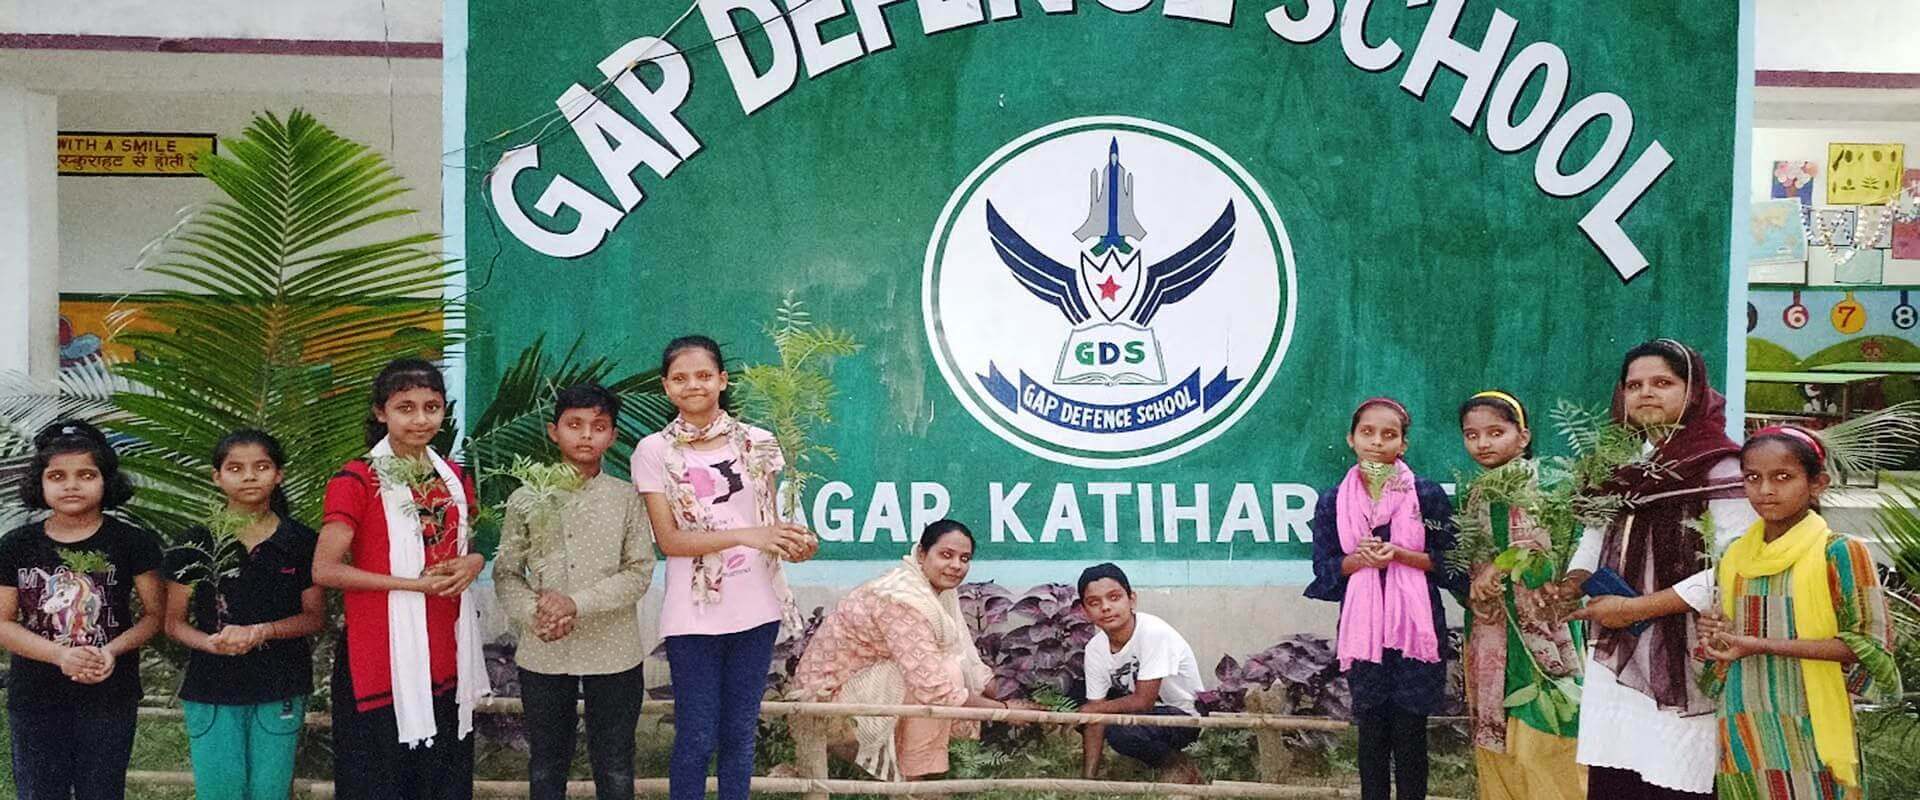 Slider of GAP defence school katihar (GDS), top cbse school in azamnagar katihar